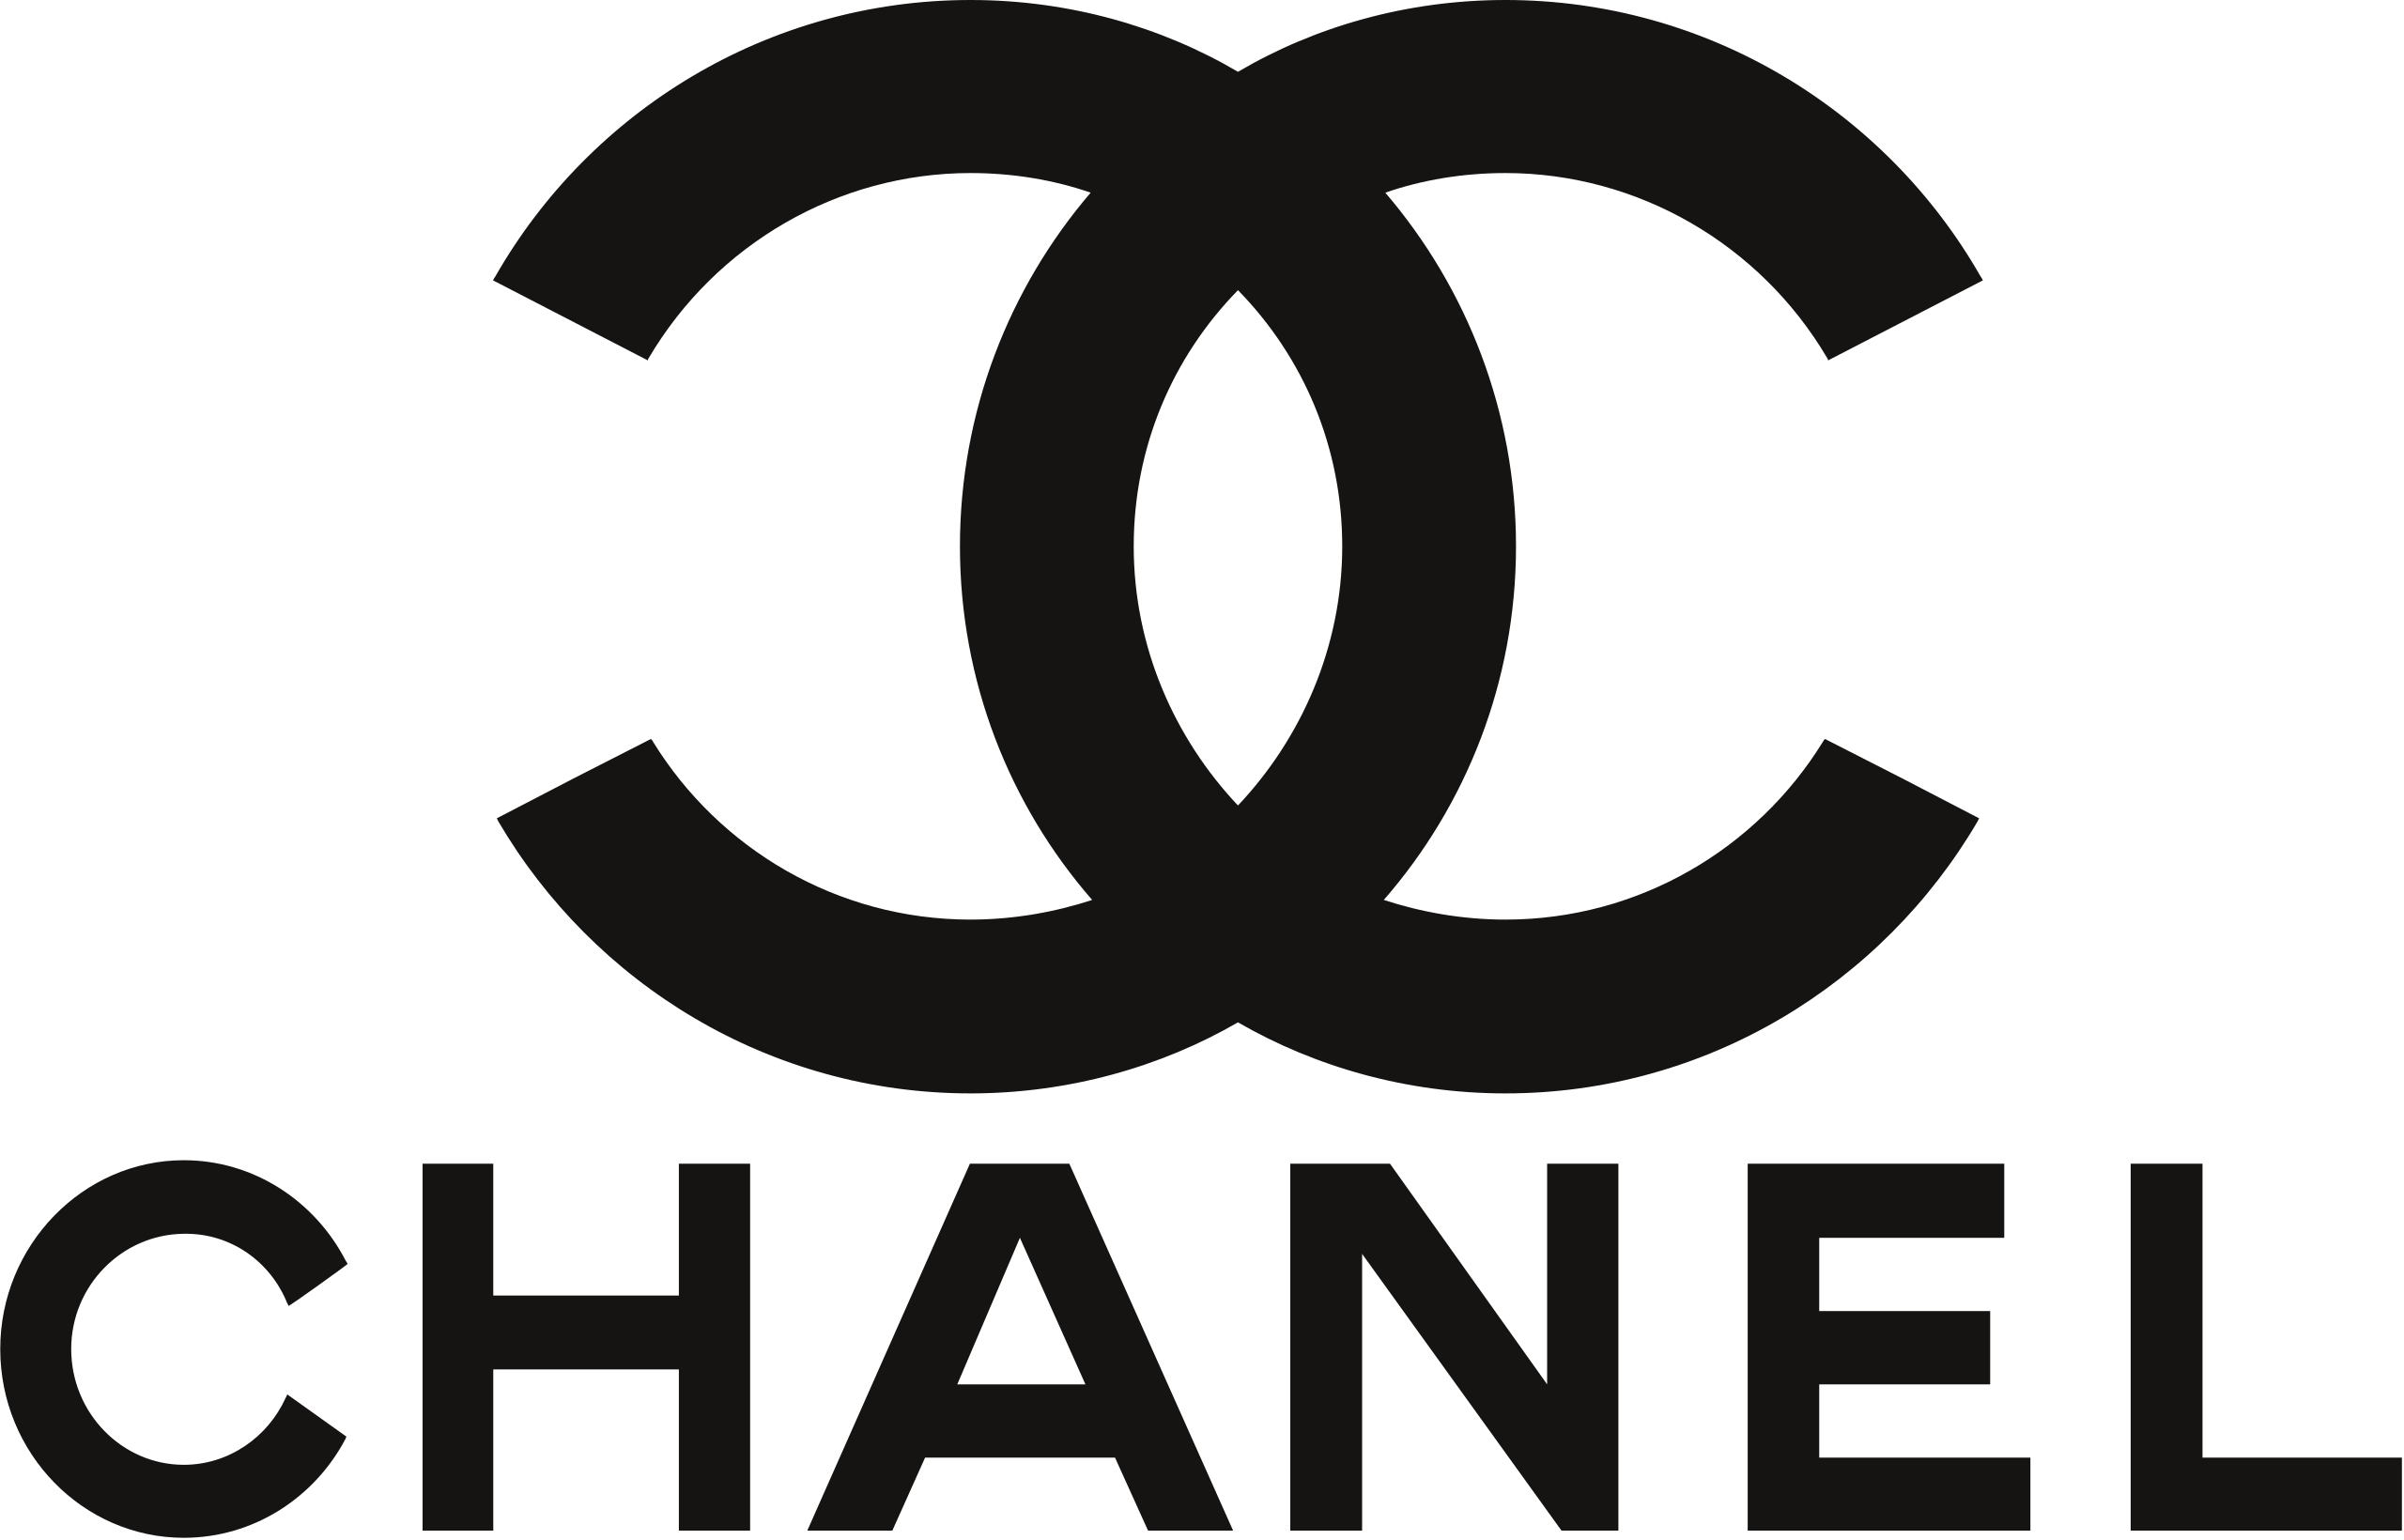 Chanel Logo